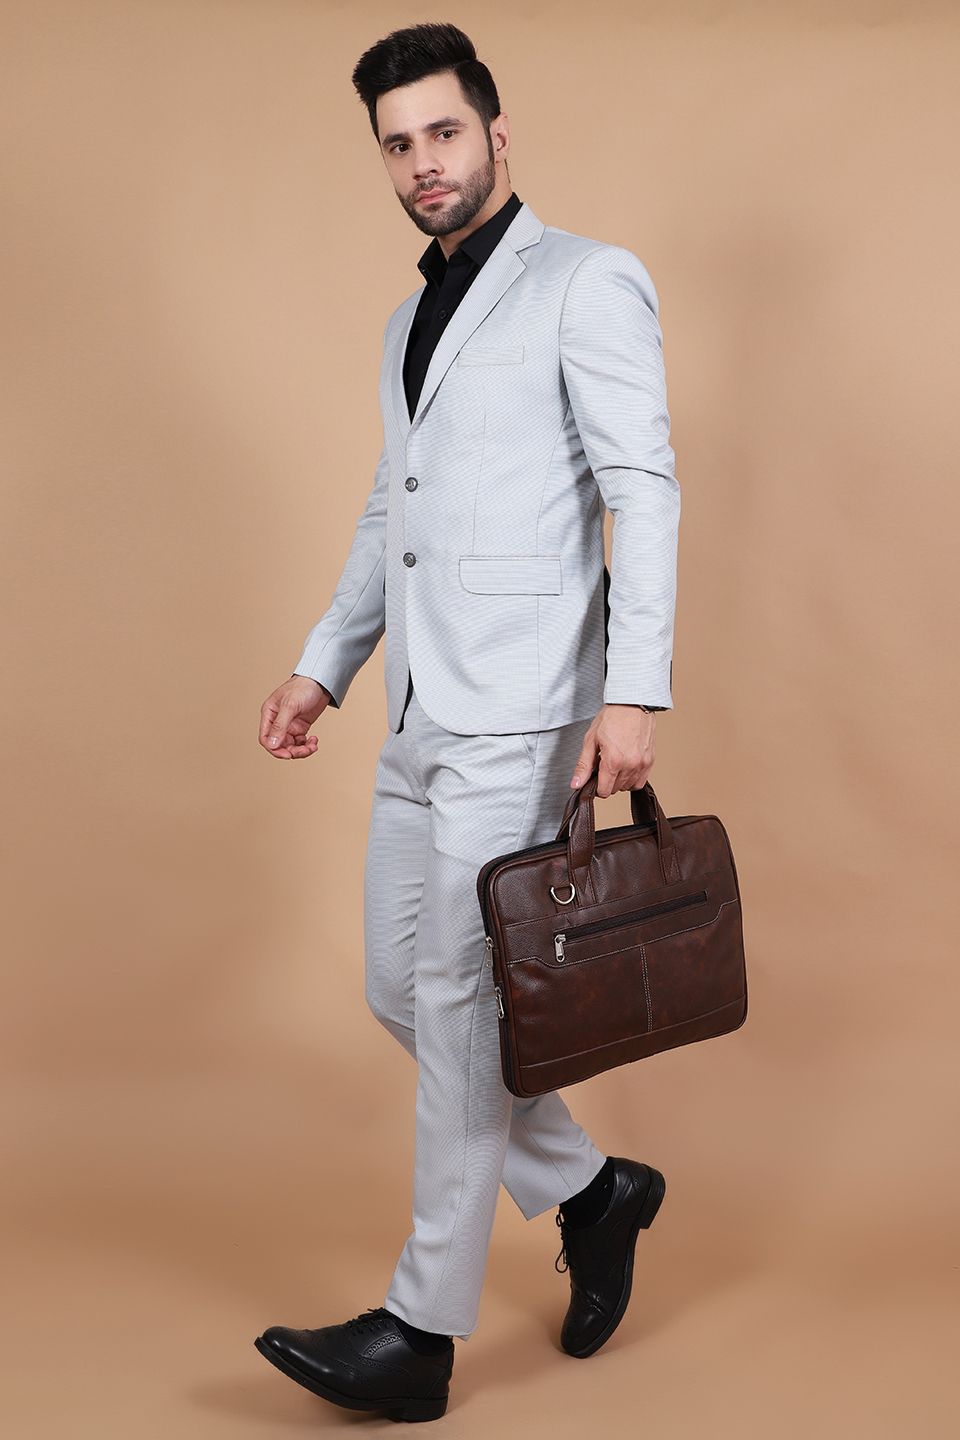 Men Tuxedo Formal Suit ROYAL DIAMOND Slim Fit 3Pc Vested shiny Satin SL82  Silver | eBay